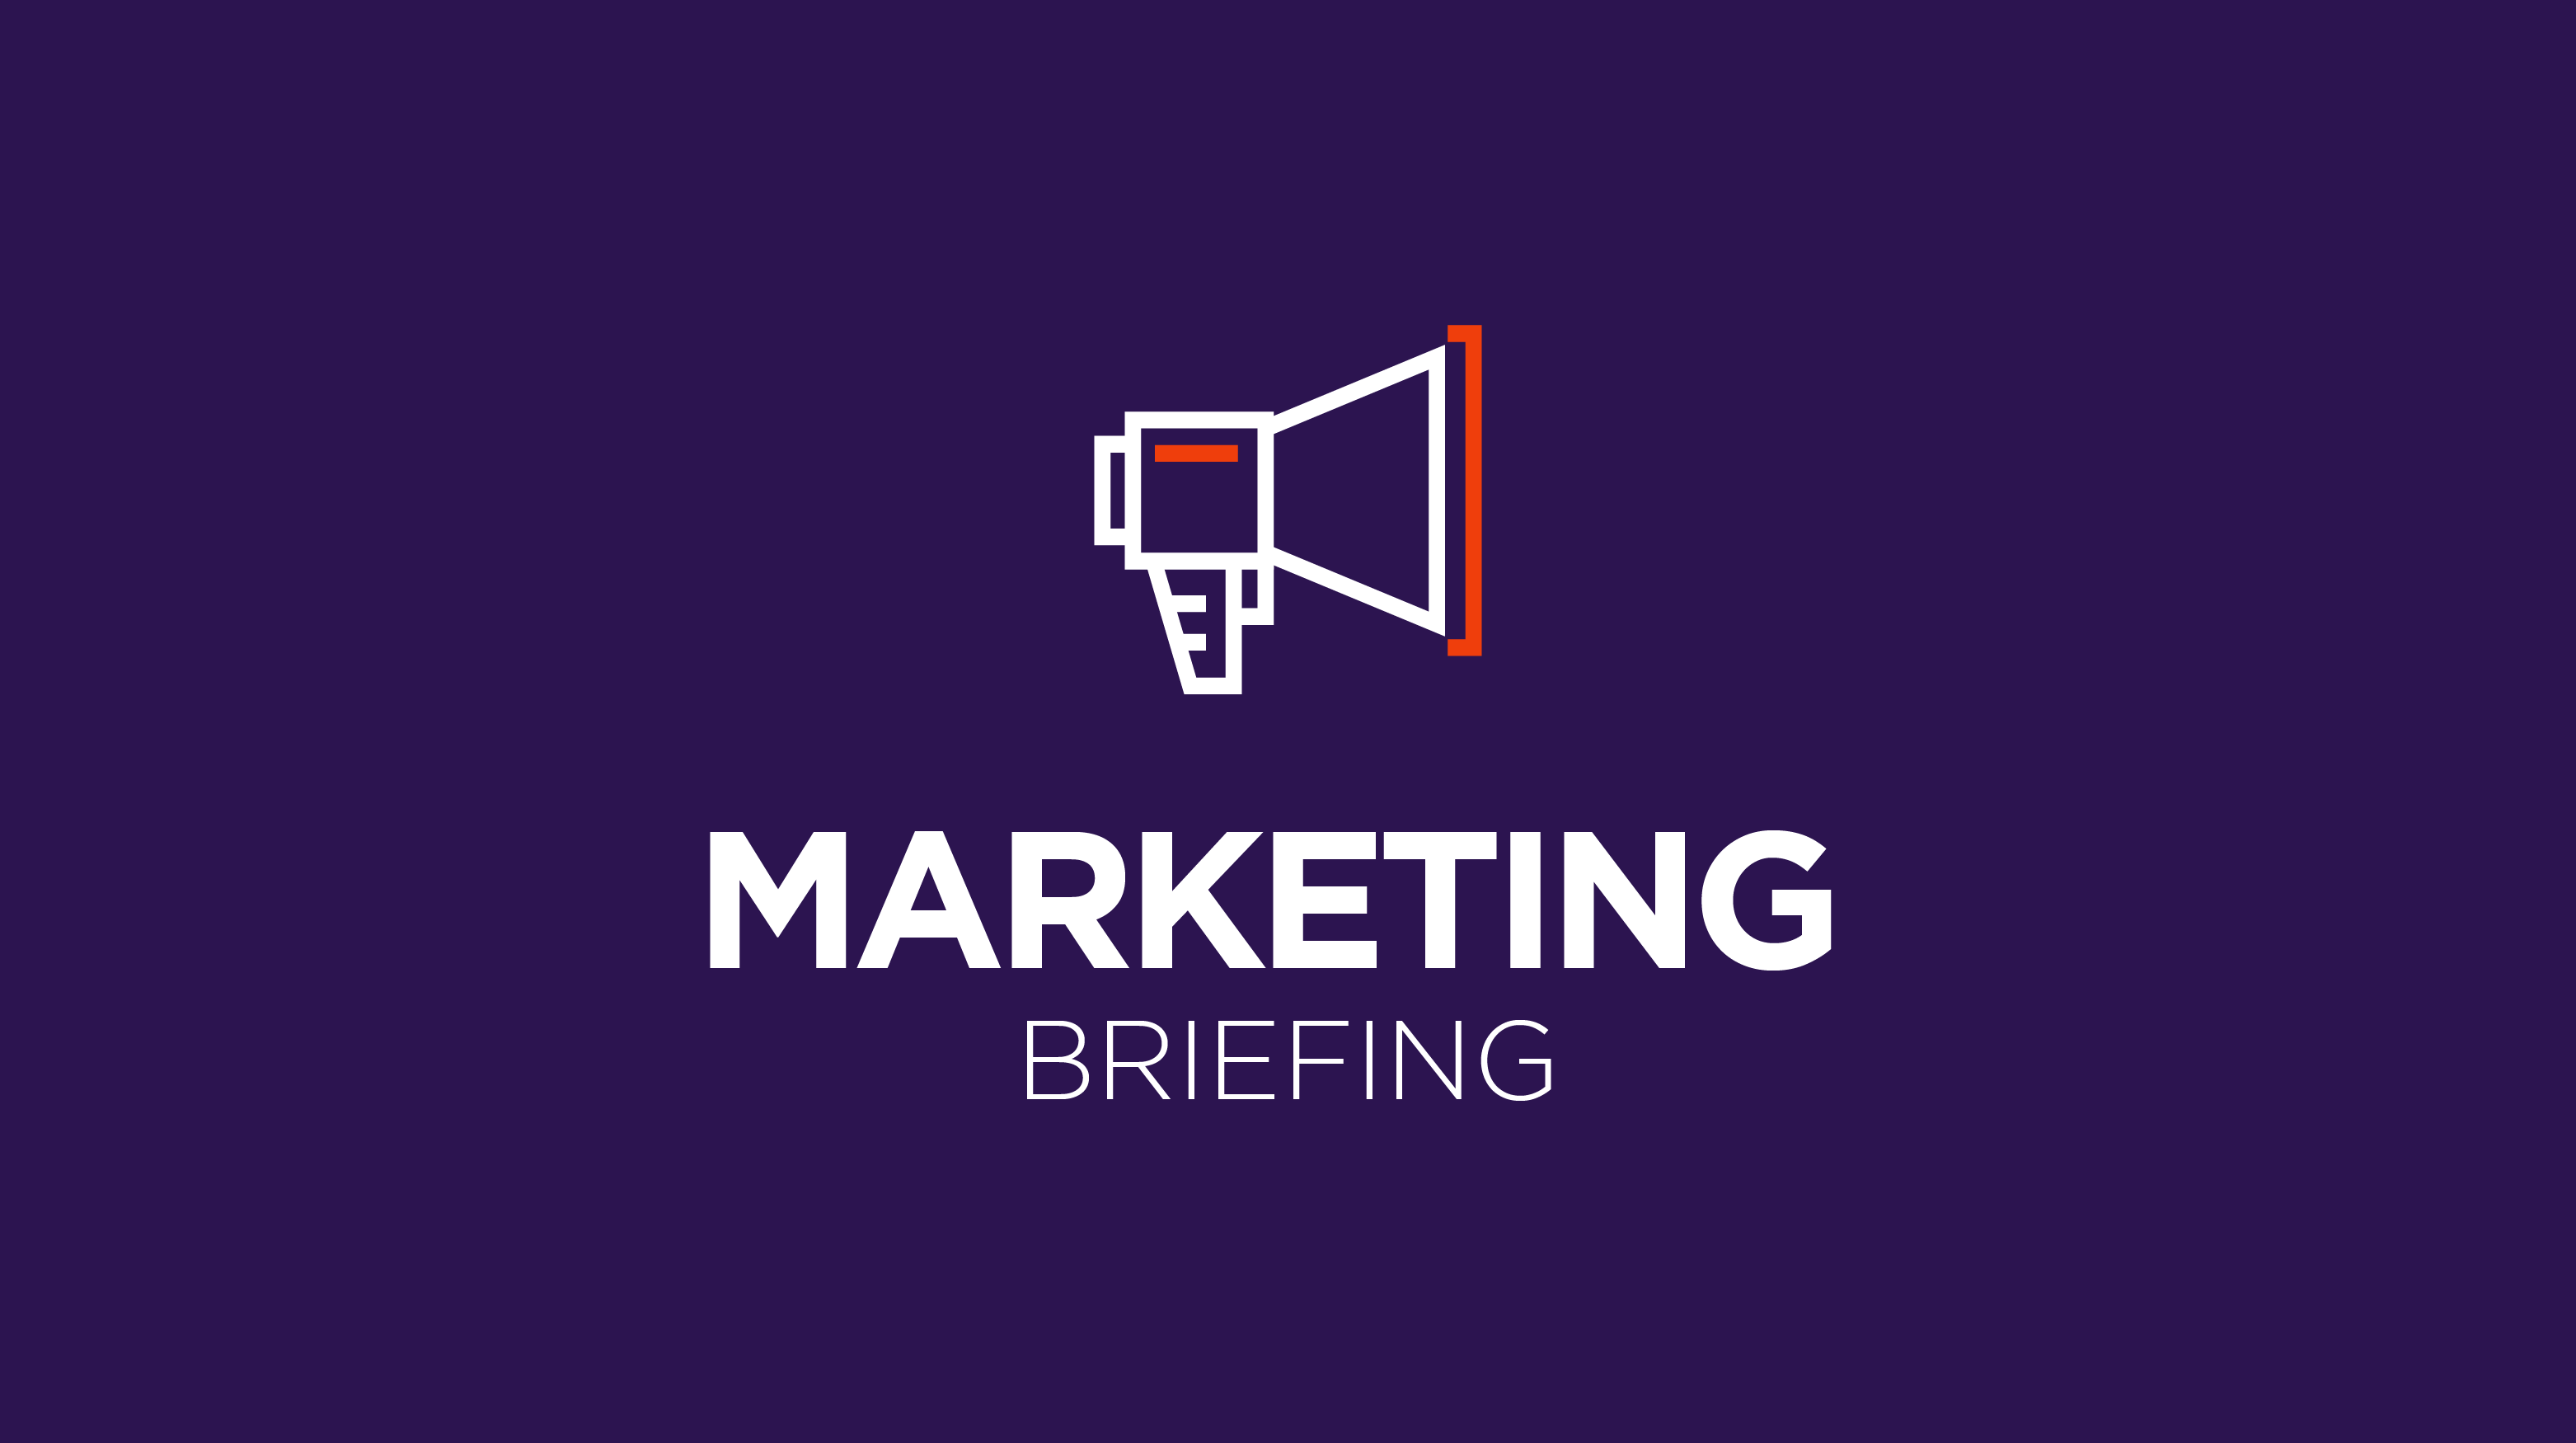 Marketing Briefing: A bank rebrands into a fintech